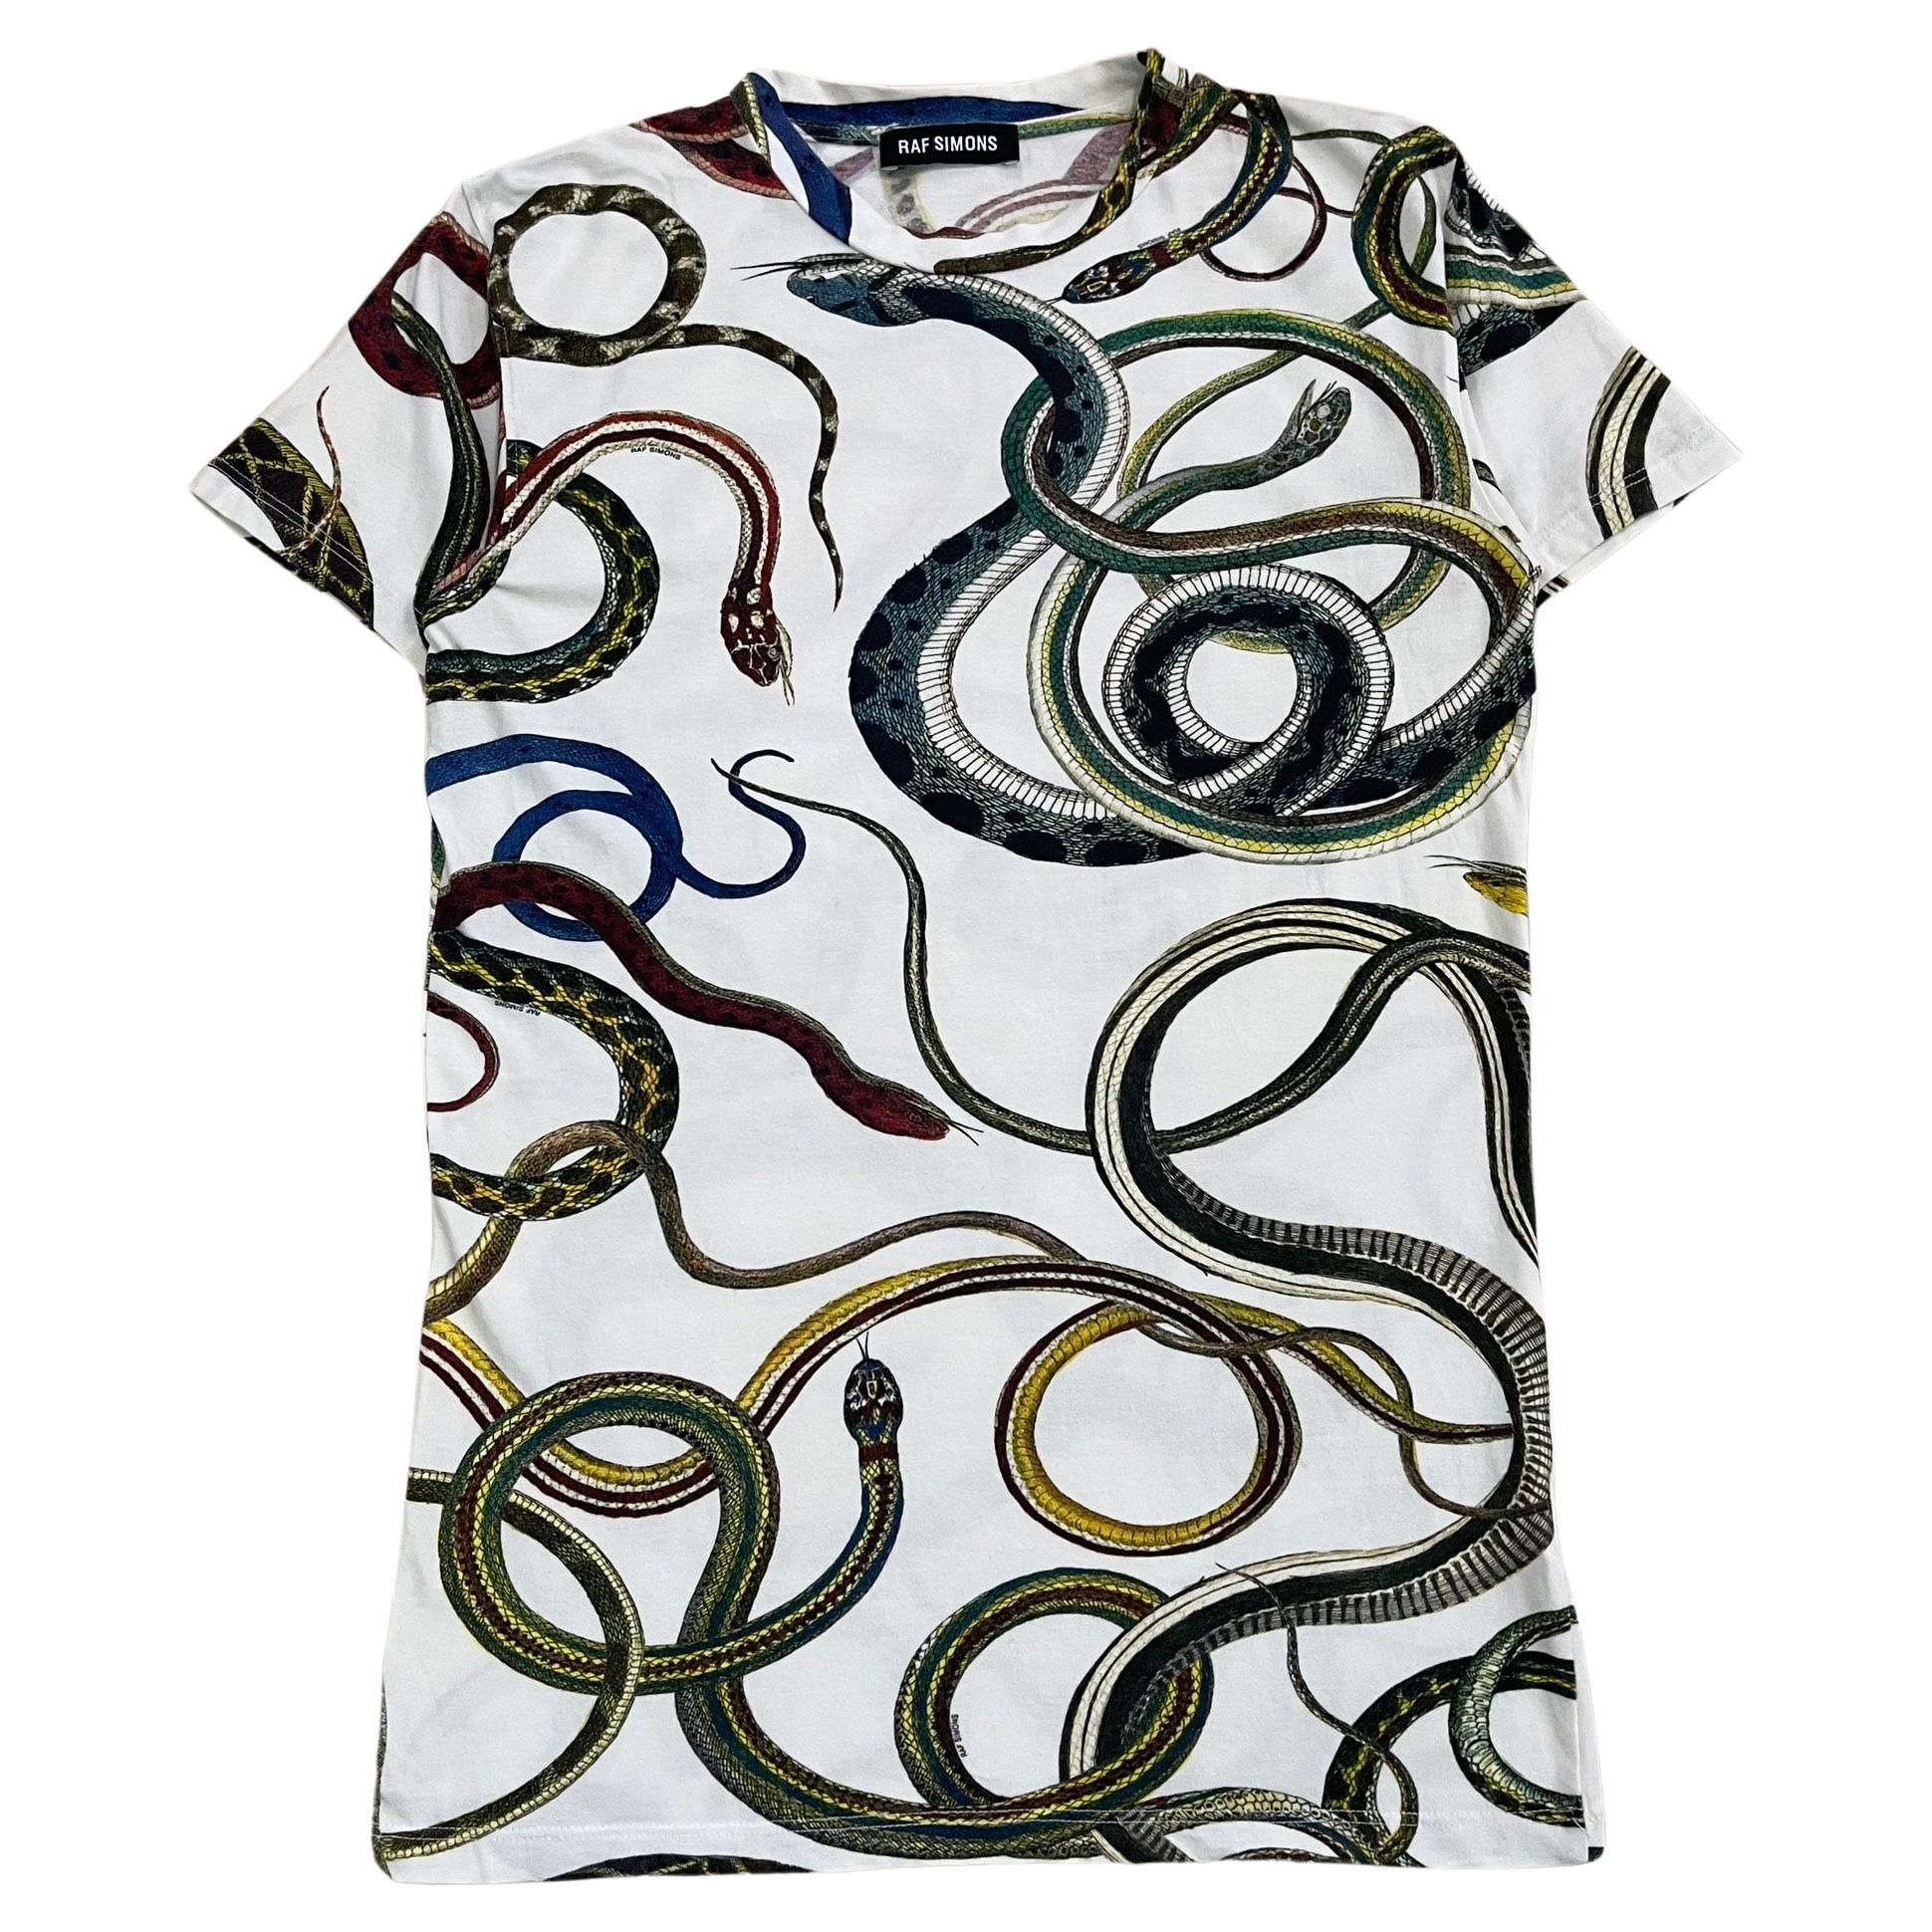 Raf Simons S/S2010 Snakes T-Shirt For Sale